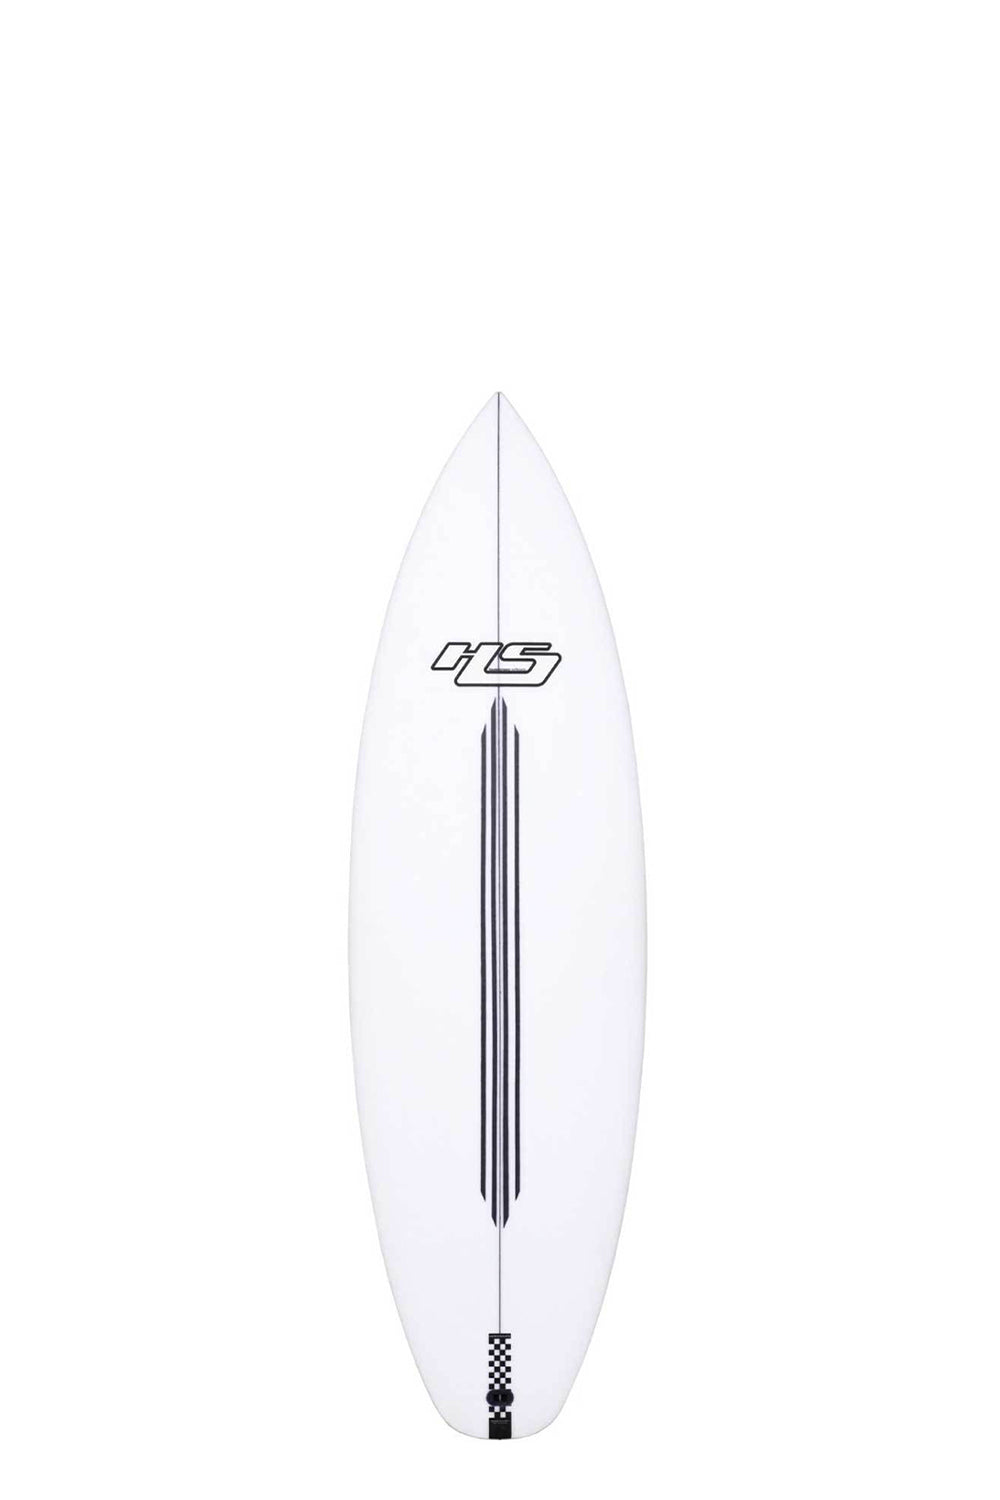 Hayden Shapes HS White NoiZ V2 GROM Surfboard by Craig Anderson